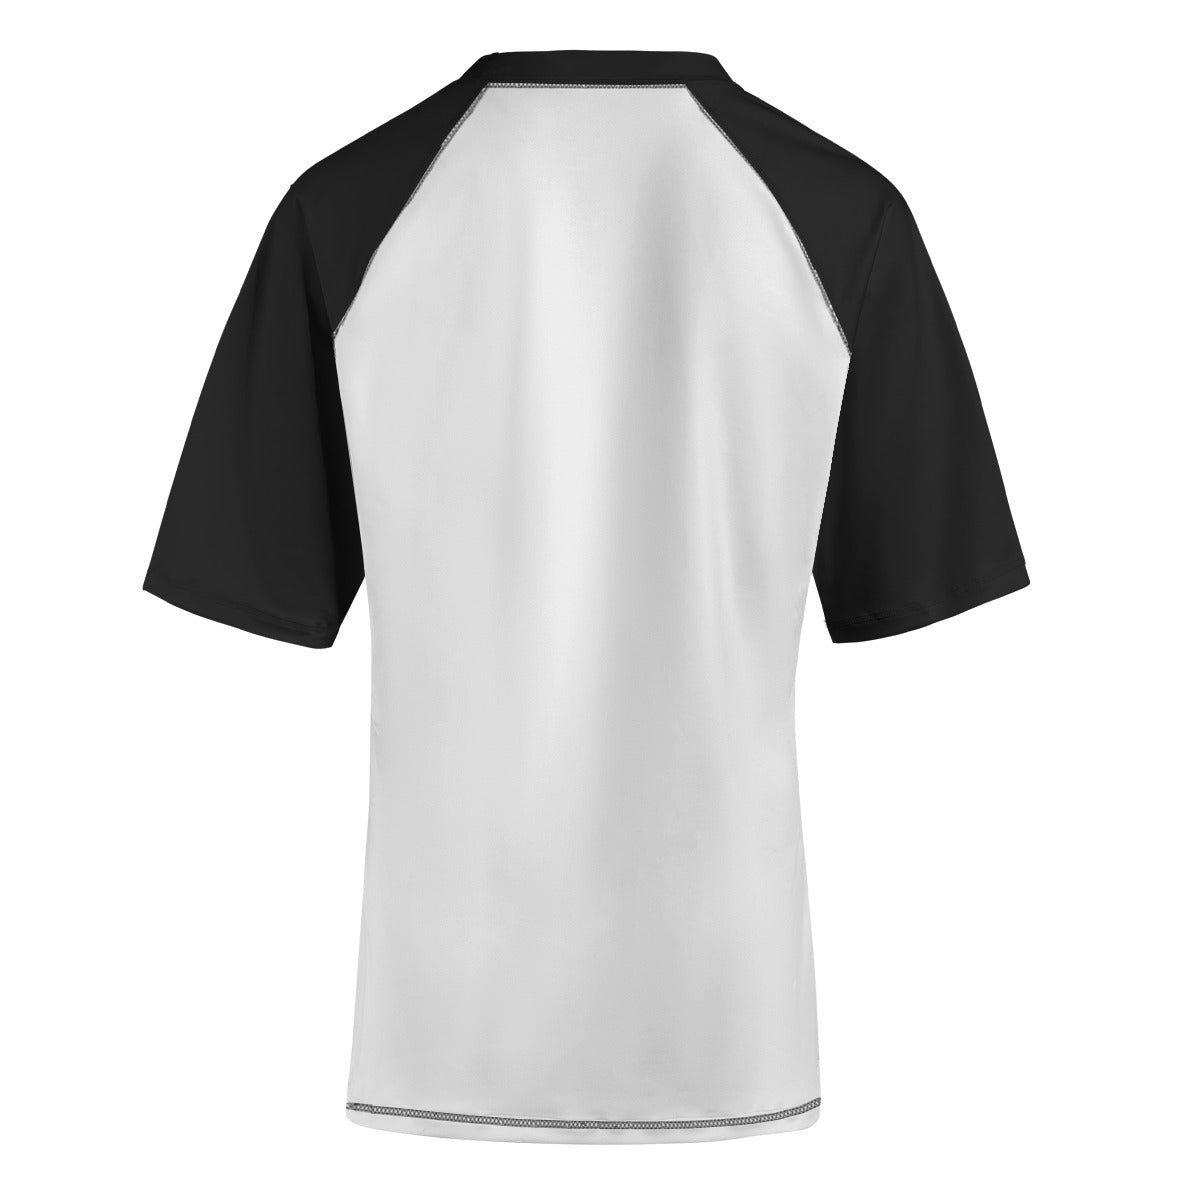 All-Over Print Unisex Yoga Sports Short Sleeve T-Shirt